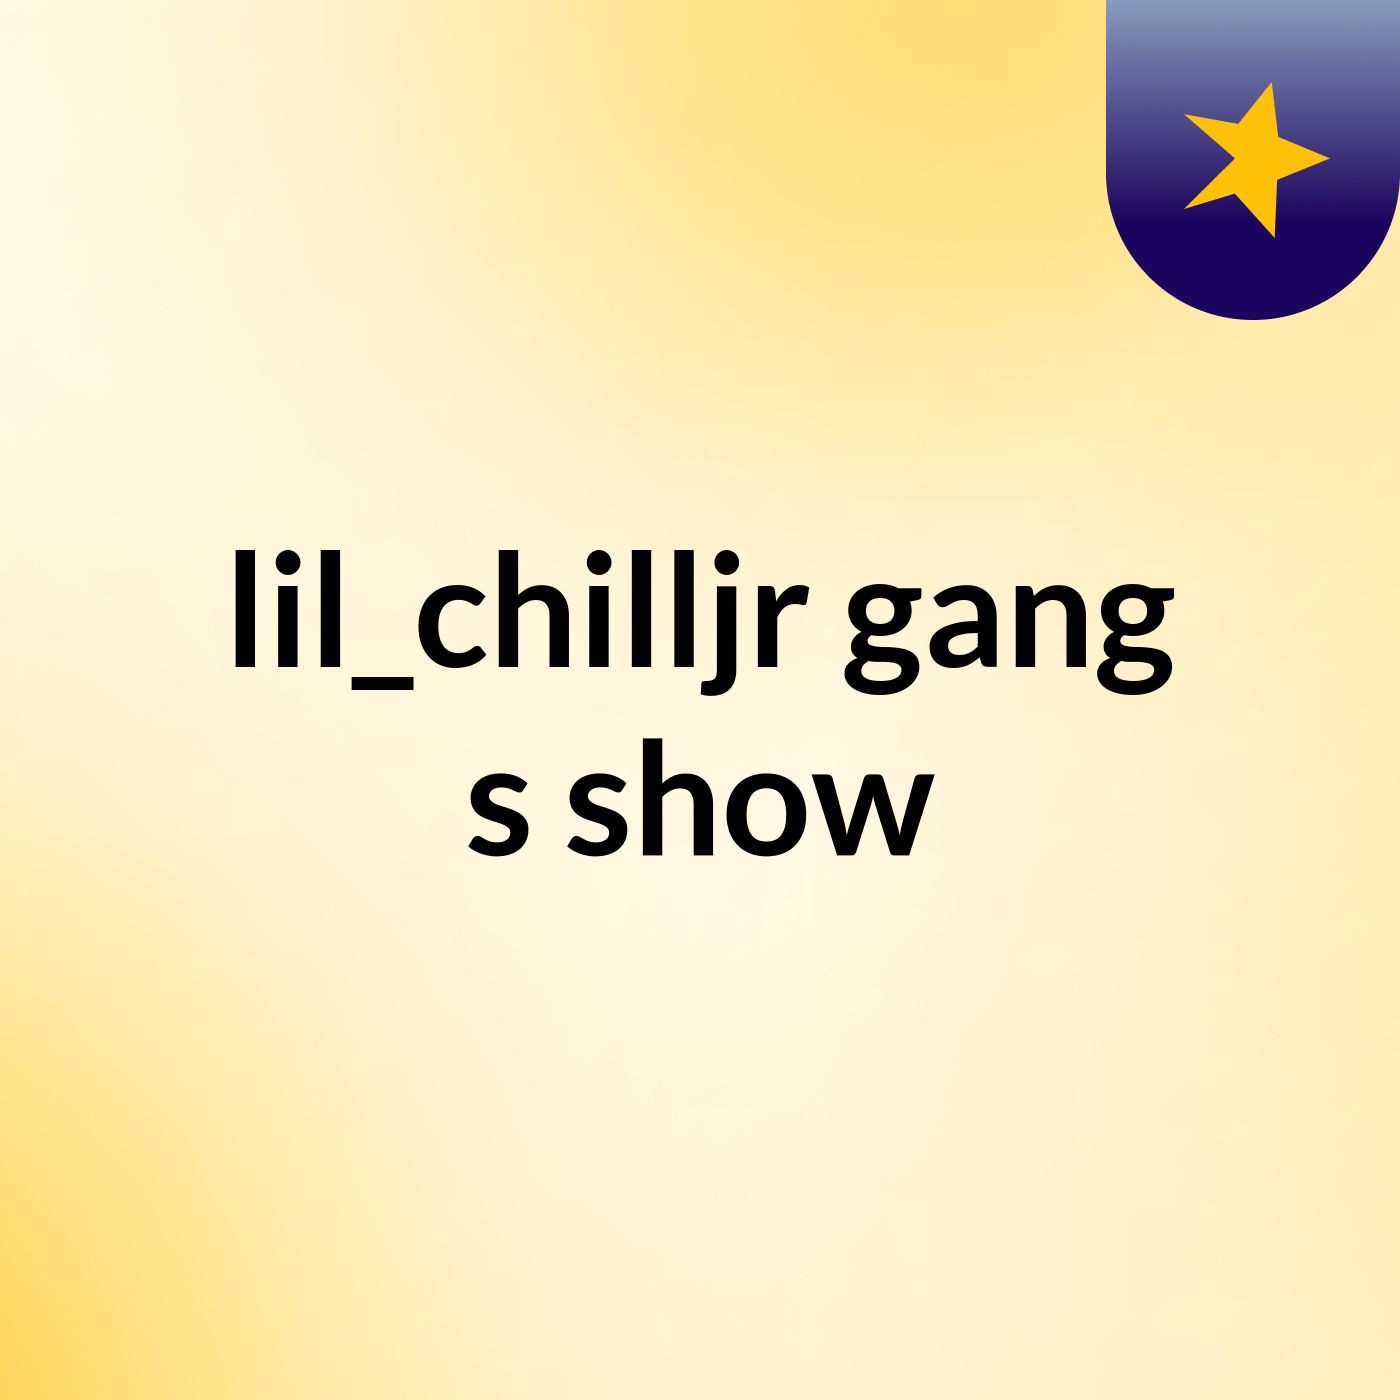 lil_chilljr gang's show